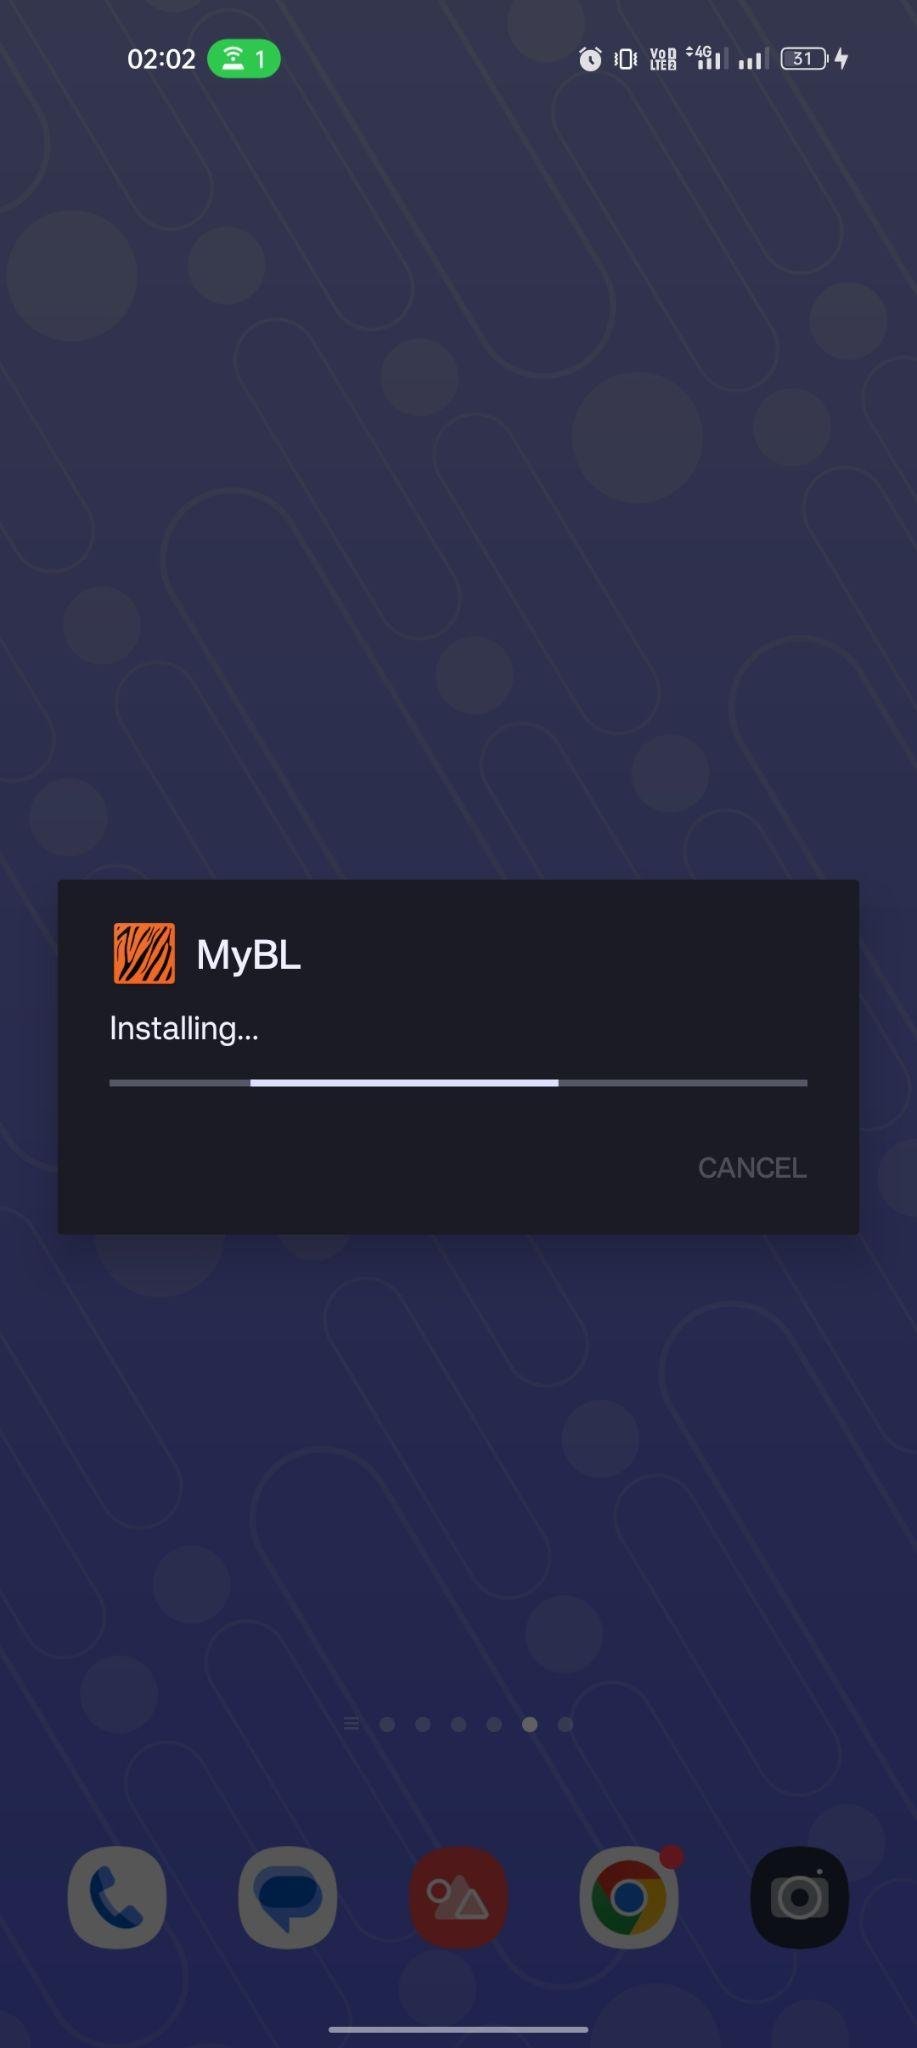 MyBL apk installing